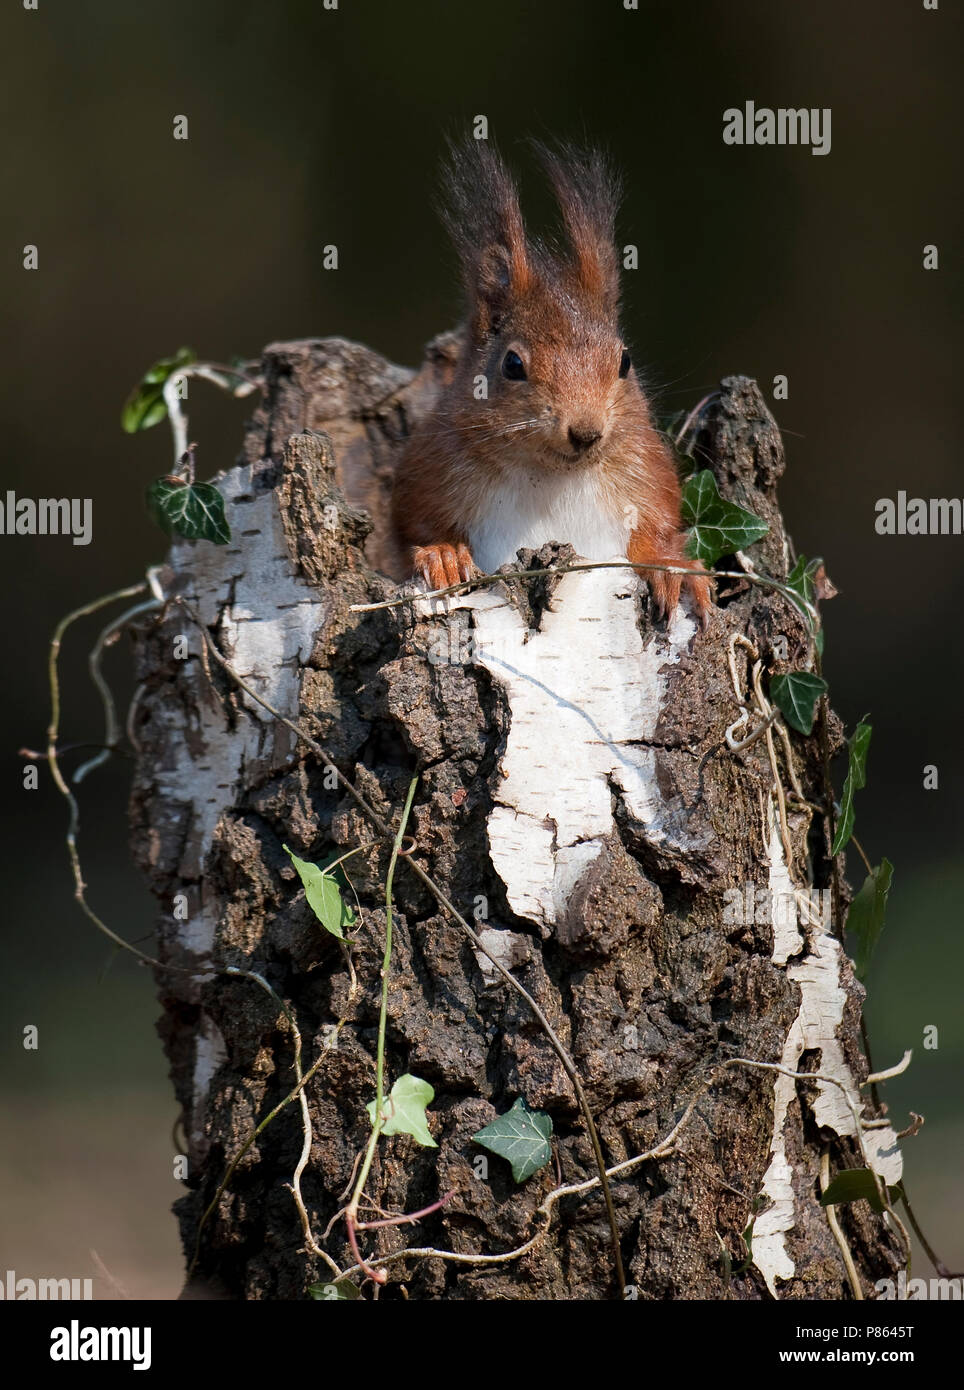 Eekhoorn zittend op stam van dode berk; la ardilla roja sentada sobre un tronco de árbol muerto Foto de stock